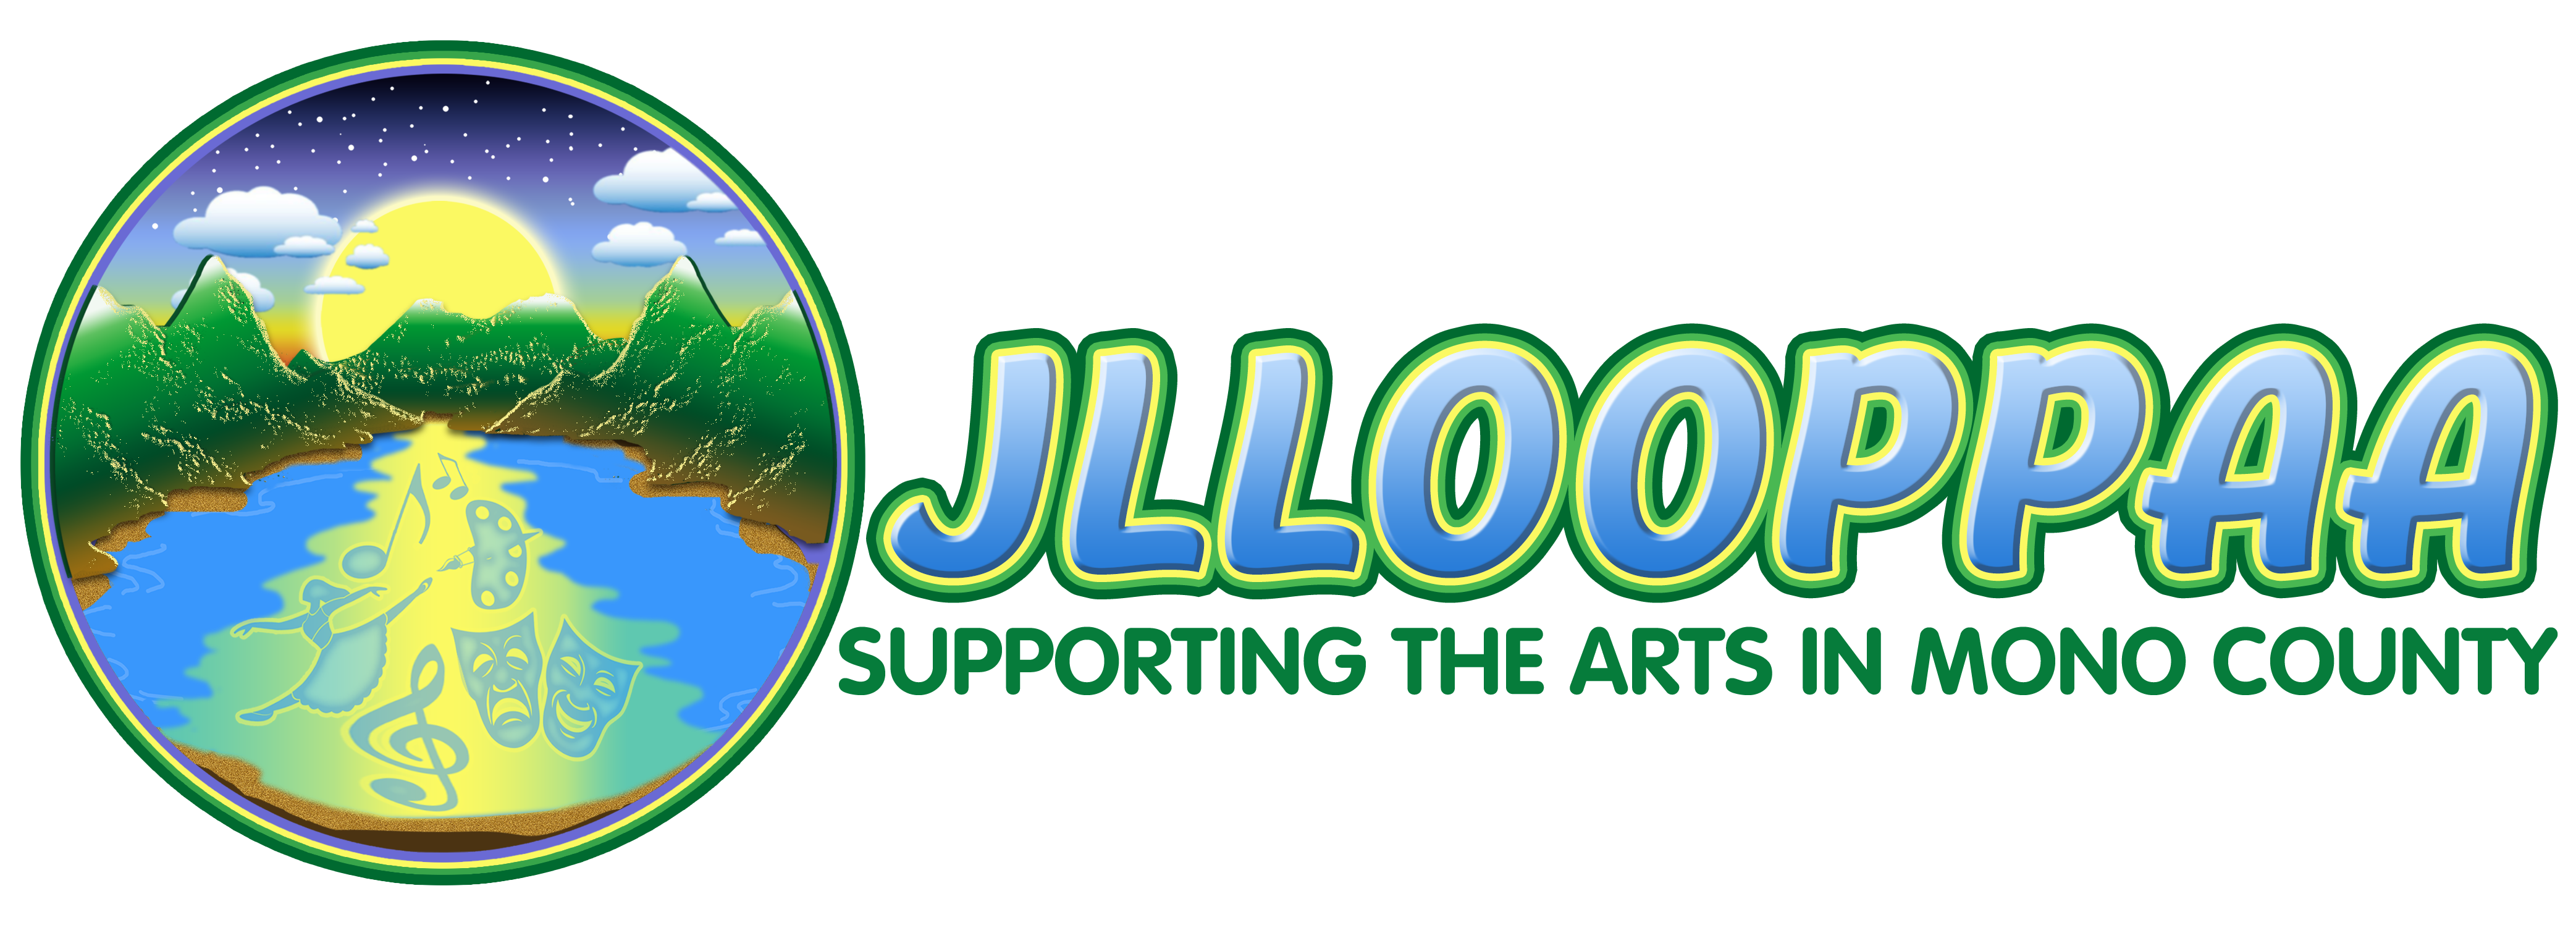 June Lake Loop Performing Arts Association Announces Youth Arts Grants